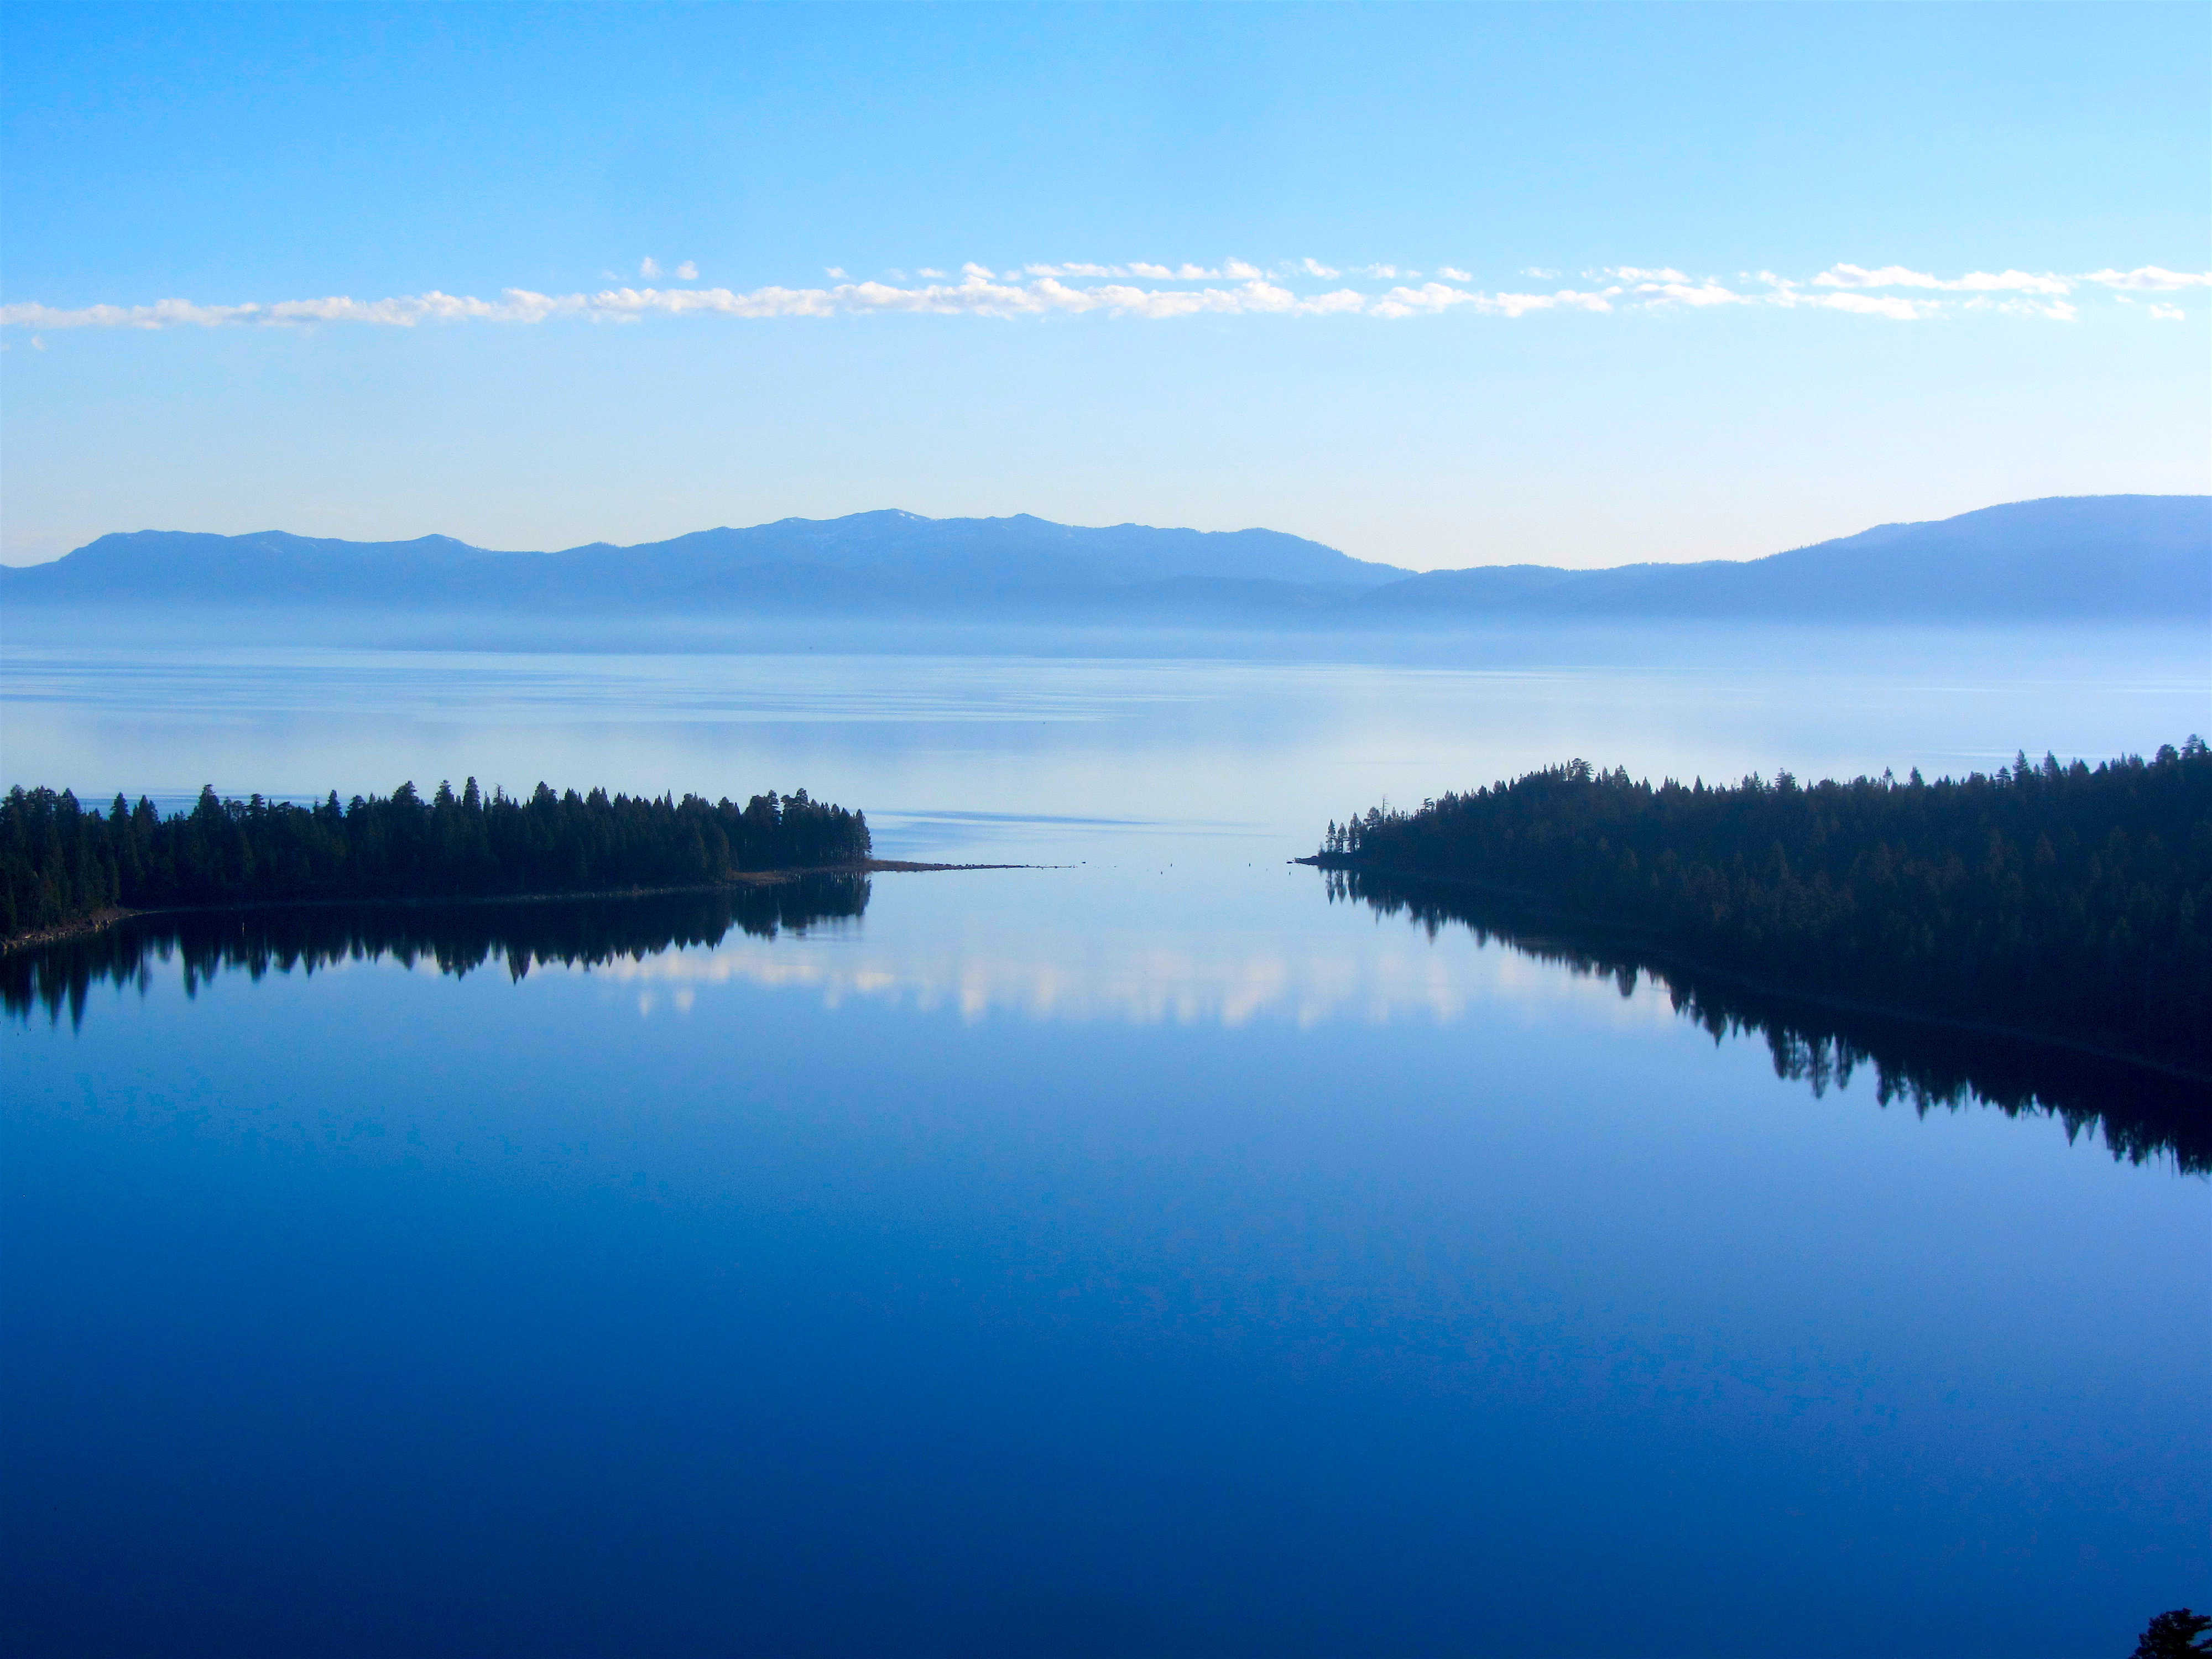 Emerald Bay, Lake Tahoe, CA this morning. photo: miles clark/snowbrains